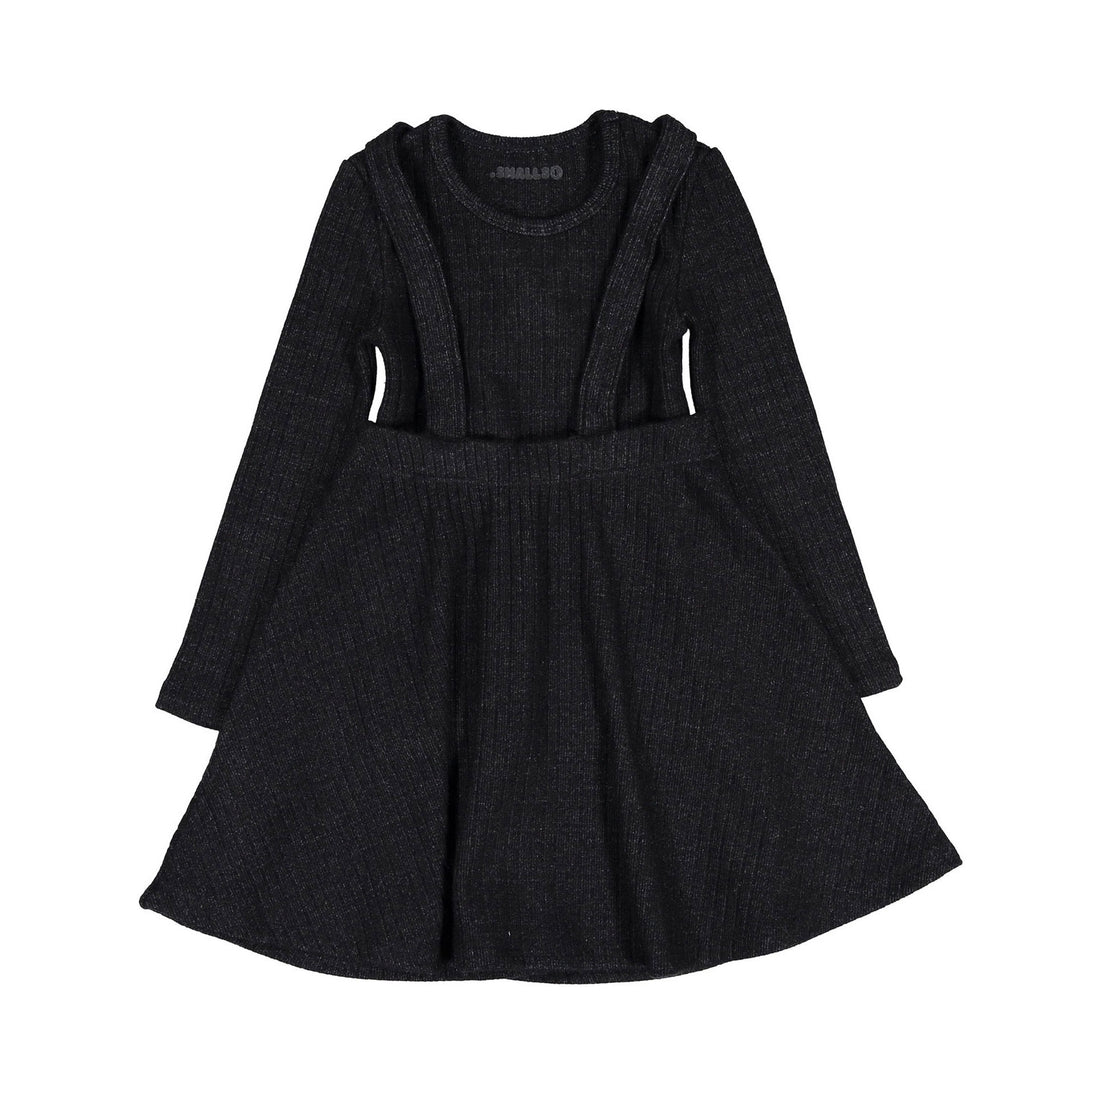 Smalls Black Knit Suspender Skirt Set